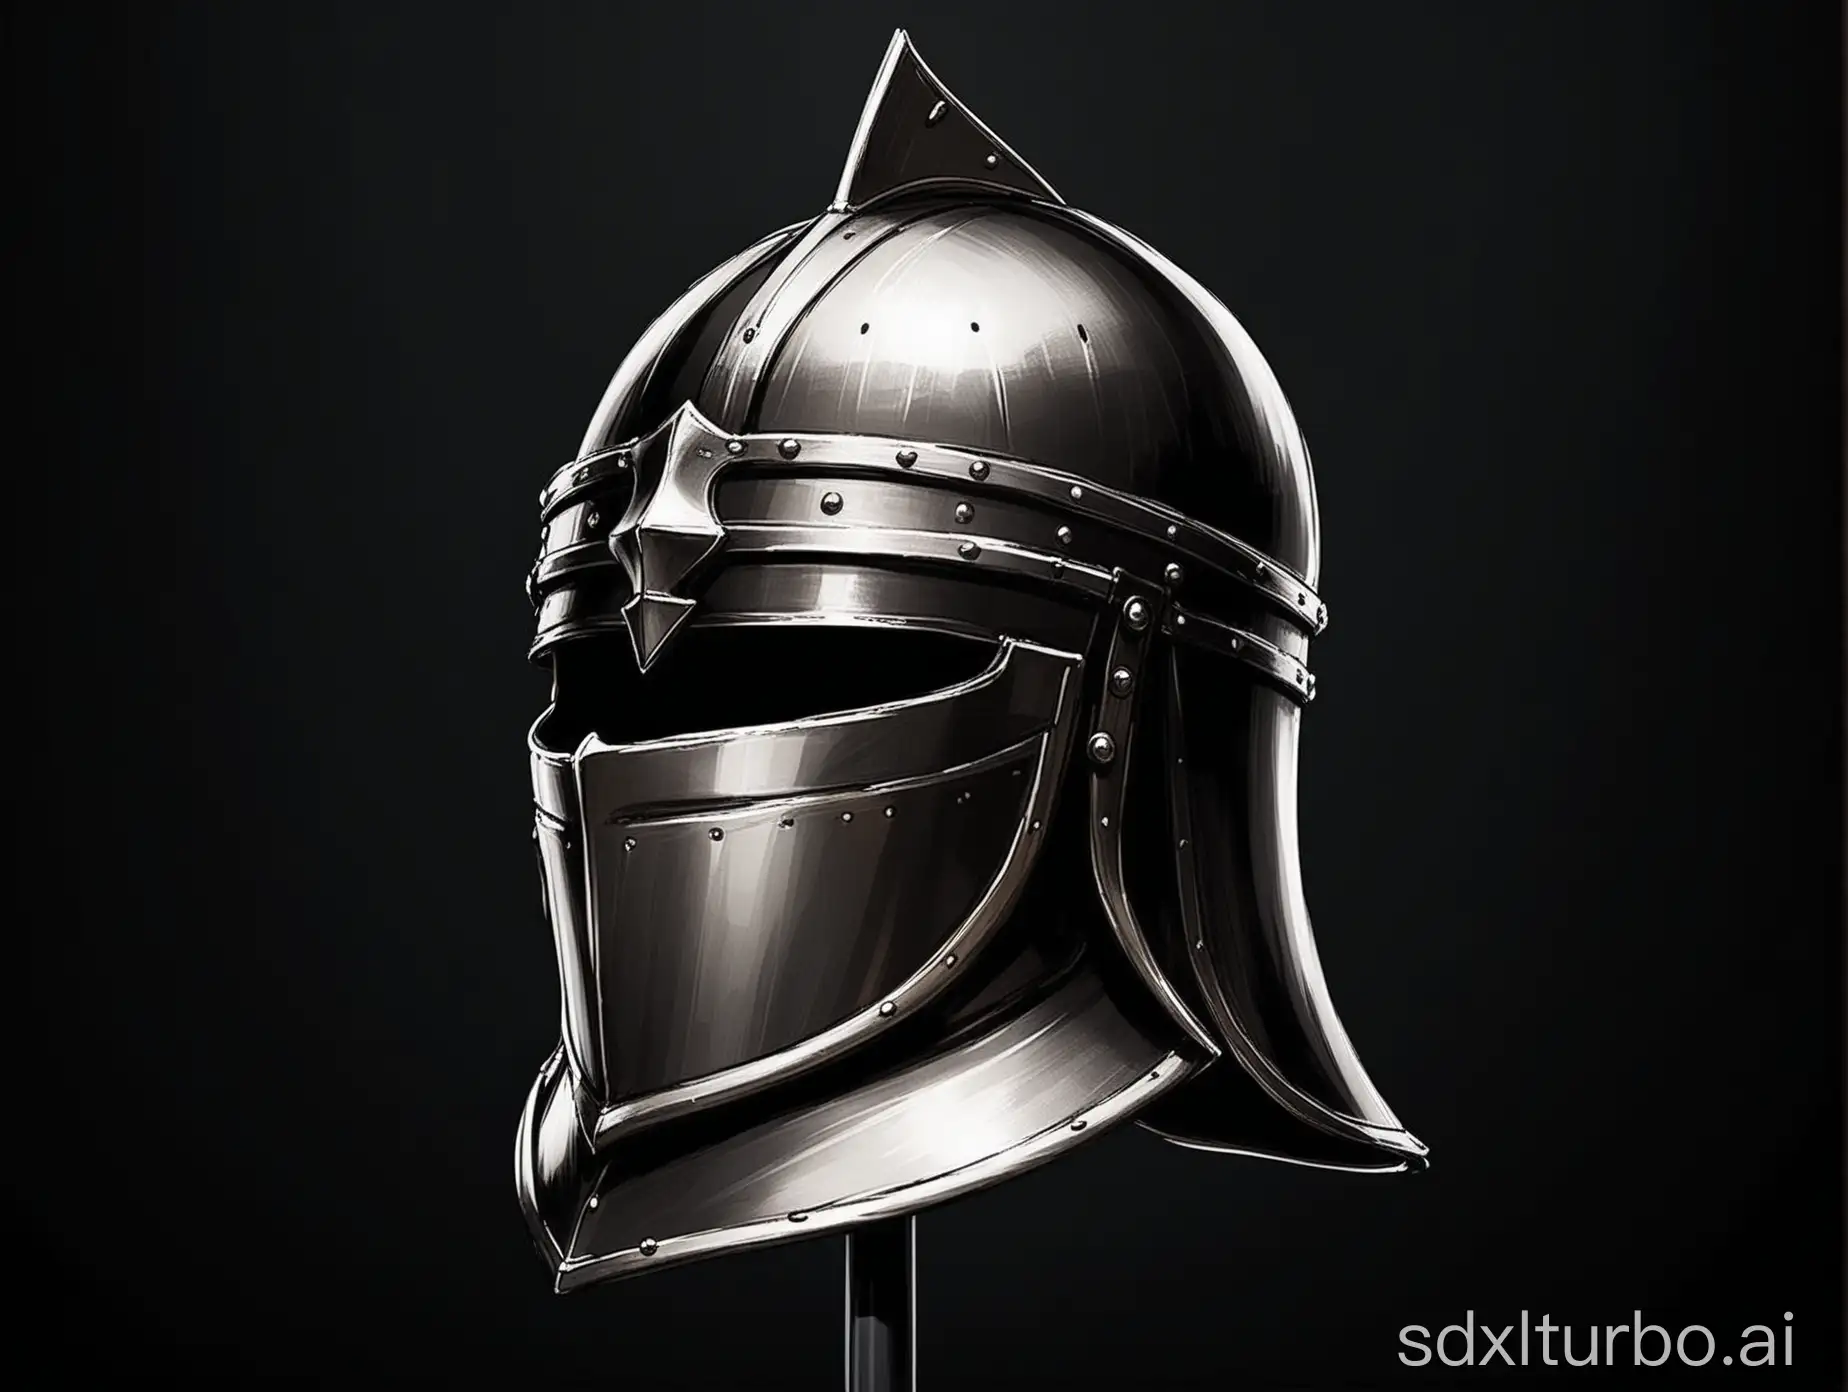 Medieval-Helmet-on-Black-Background-Historic-Armor-Display